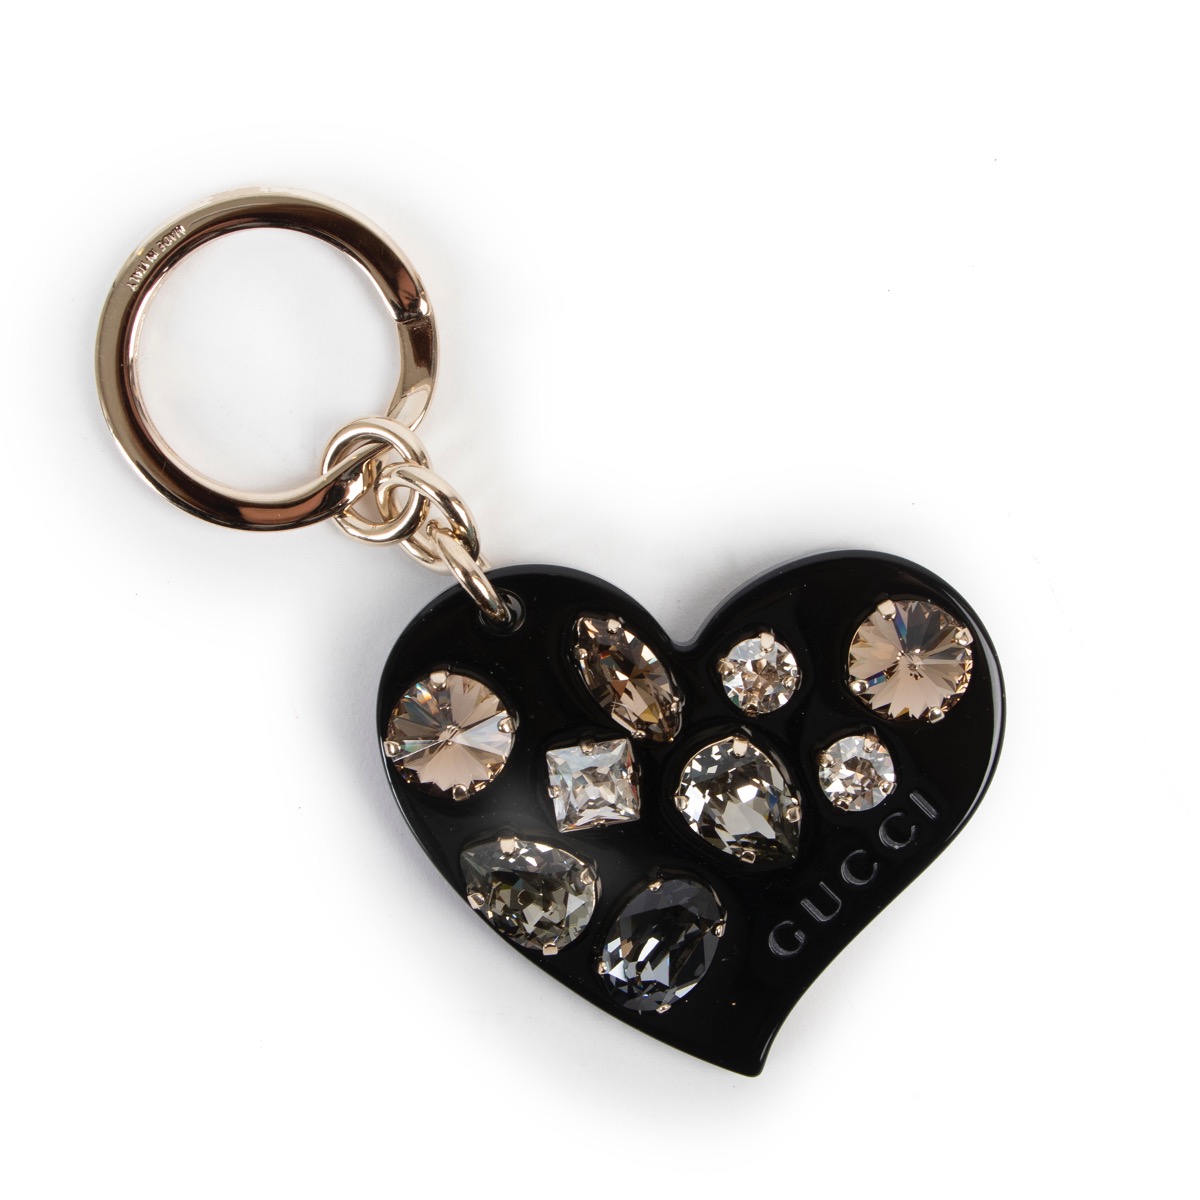 Gucci 752695 JCFUX DOUBLE G HEART-SHAPED Key holder Black